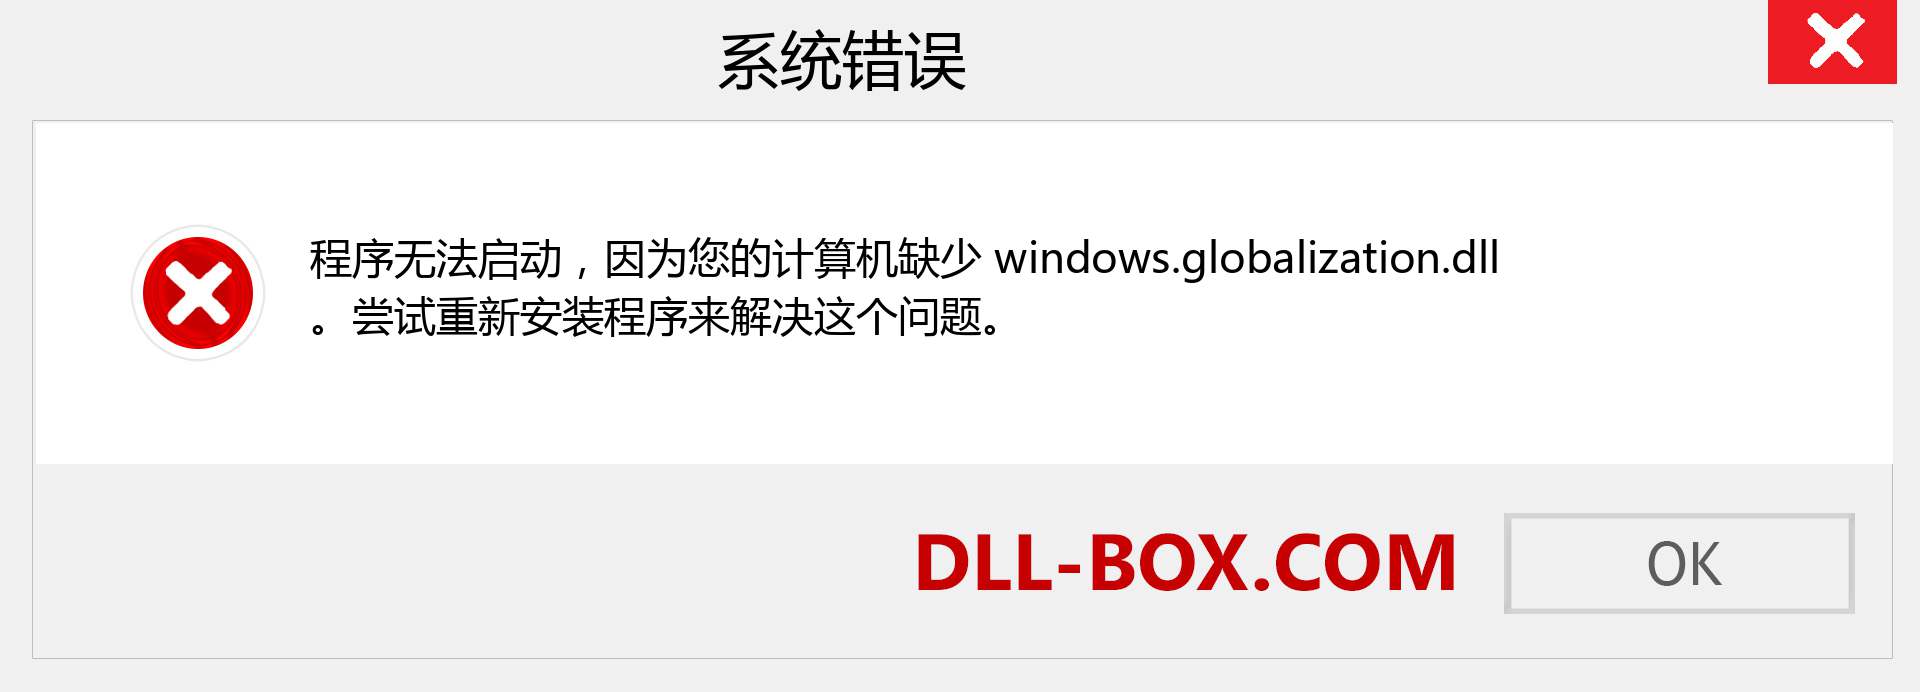 windows.globalization.dll 文件丢失？。 适用于 Windows 7、8、10 的下载 - 修复 Windows、照片、图像上的 windows.globalization dll 丢失错误